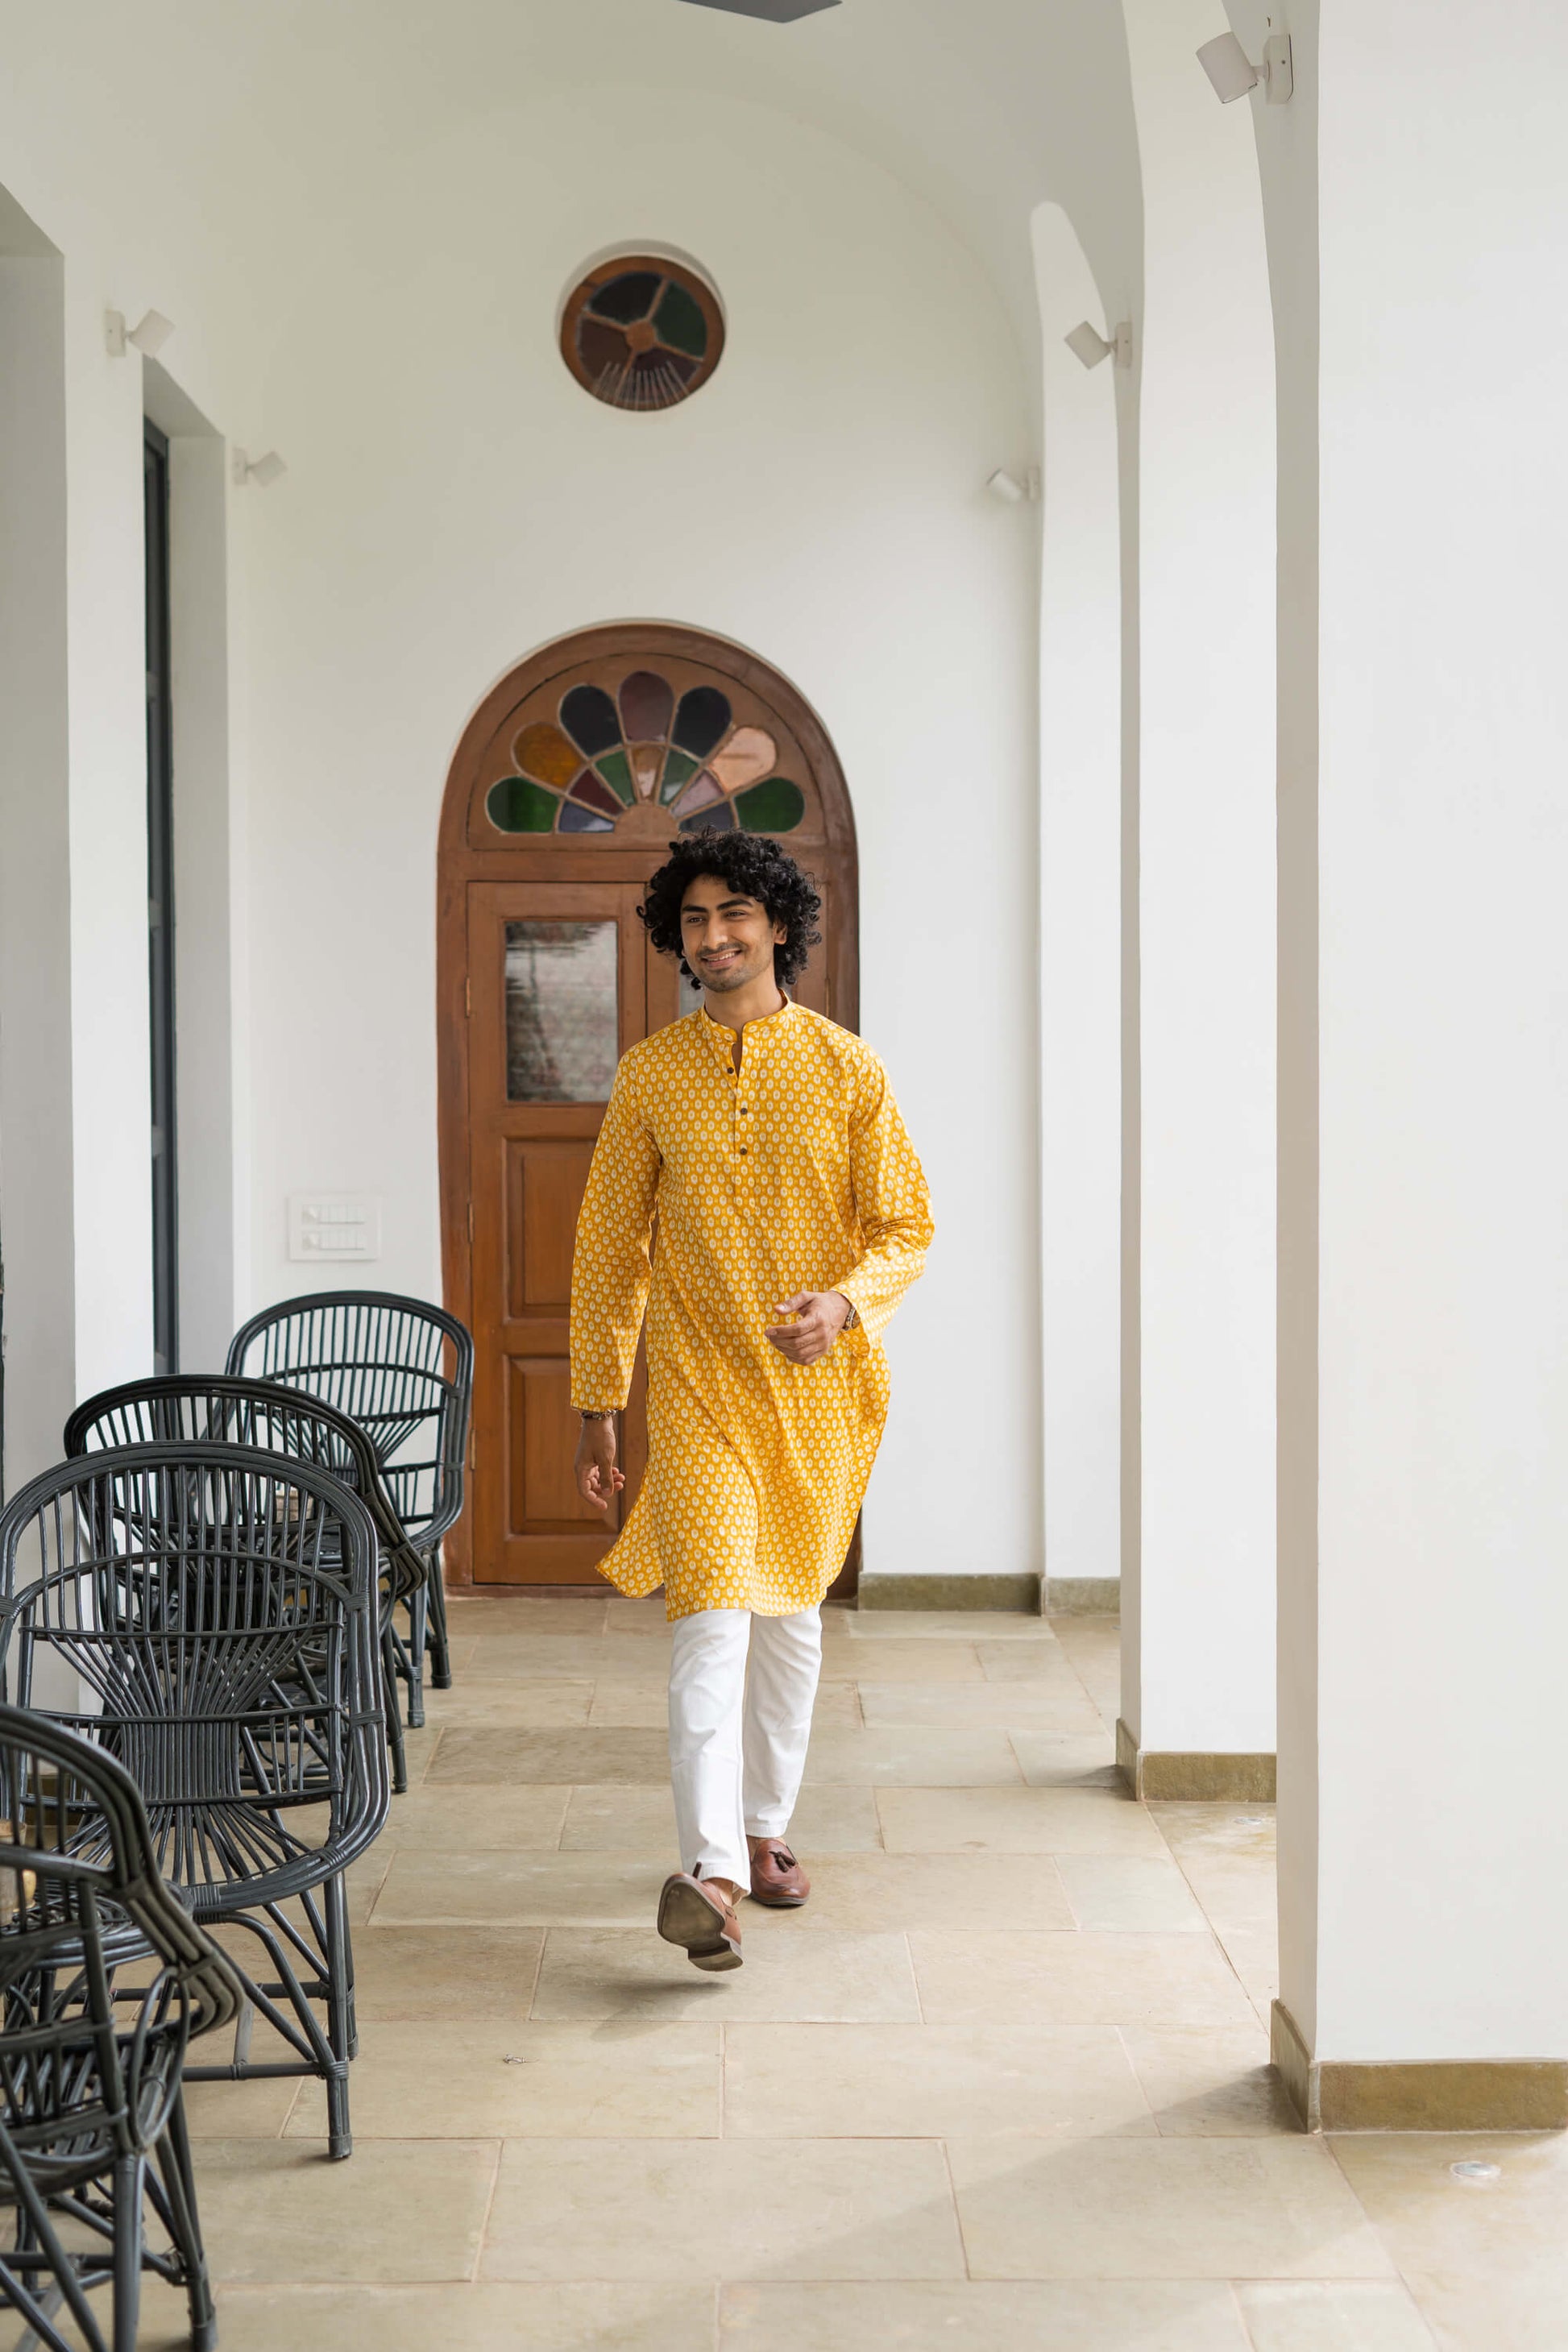 Indian man in yellow long kurta